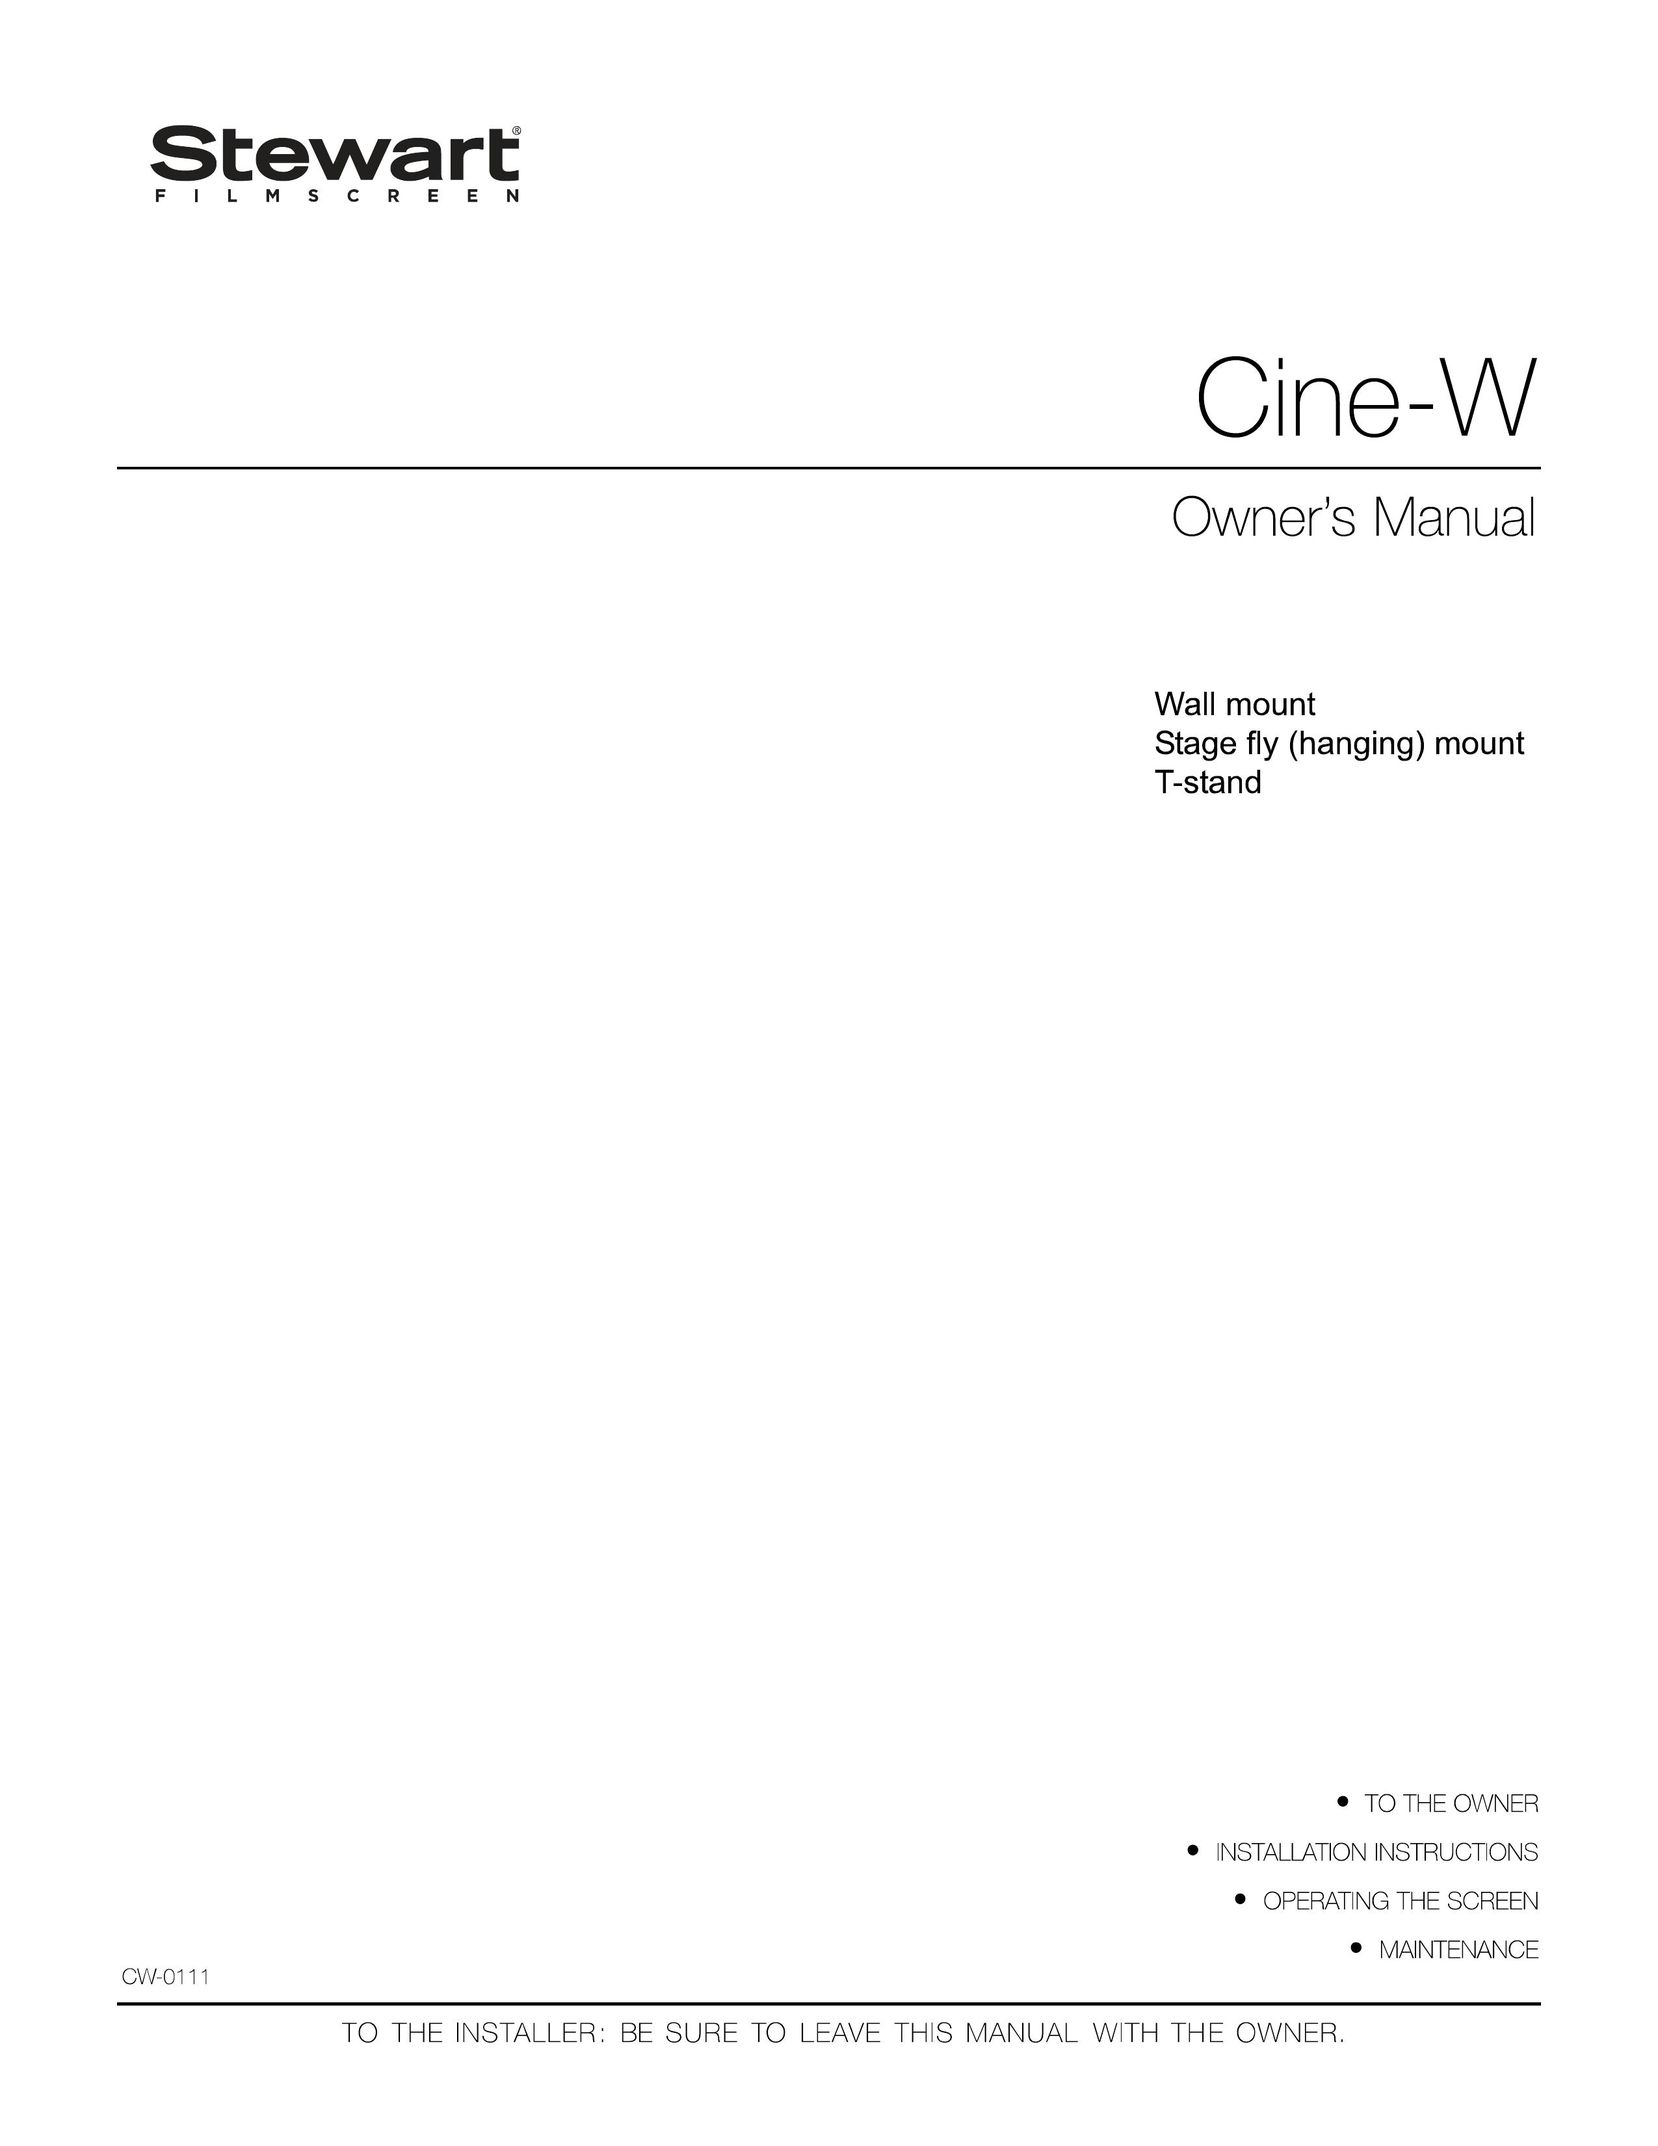 Stewart Filmscreen Corp CW-0111 Projector Accessories User Manual